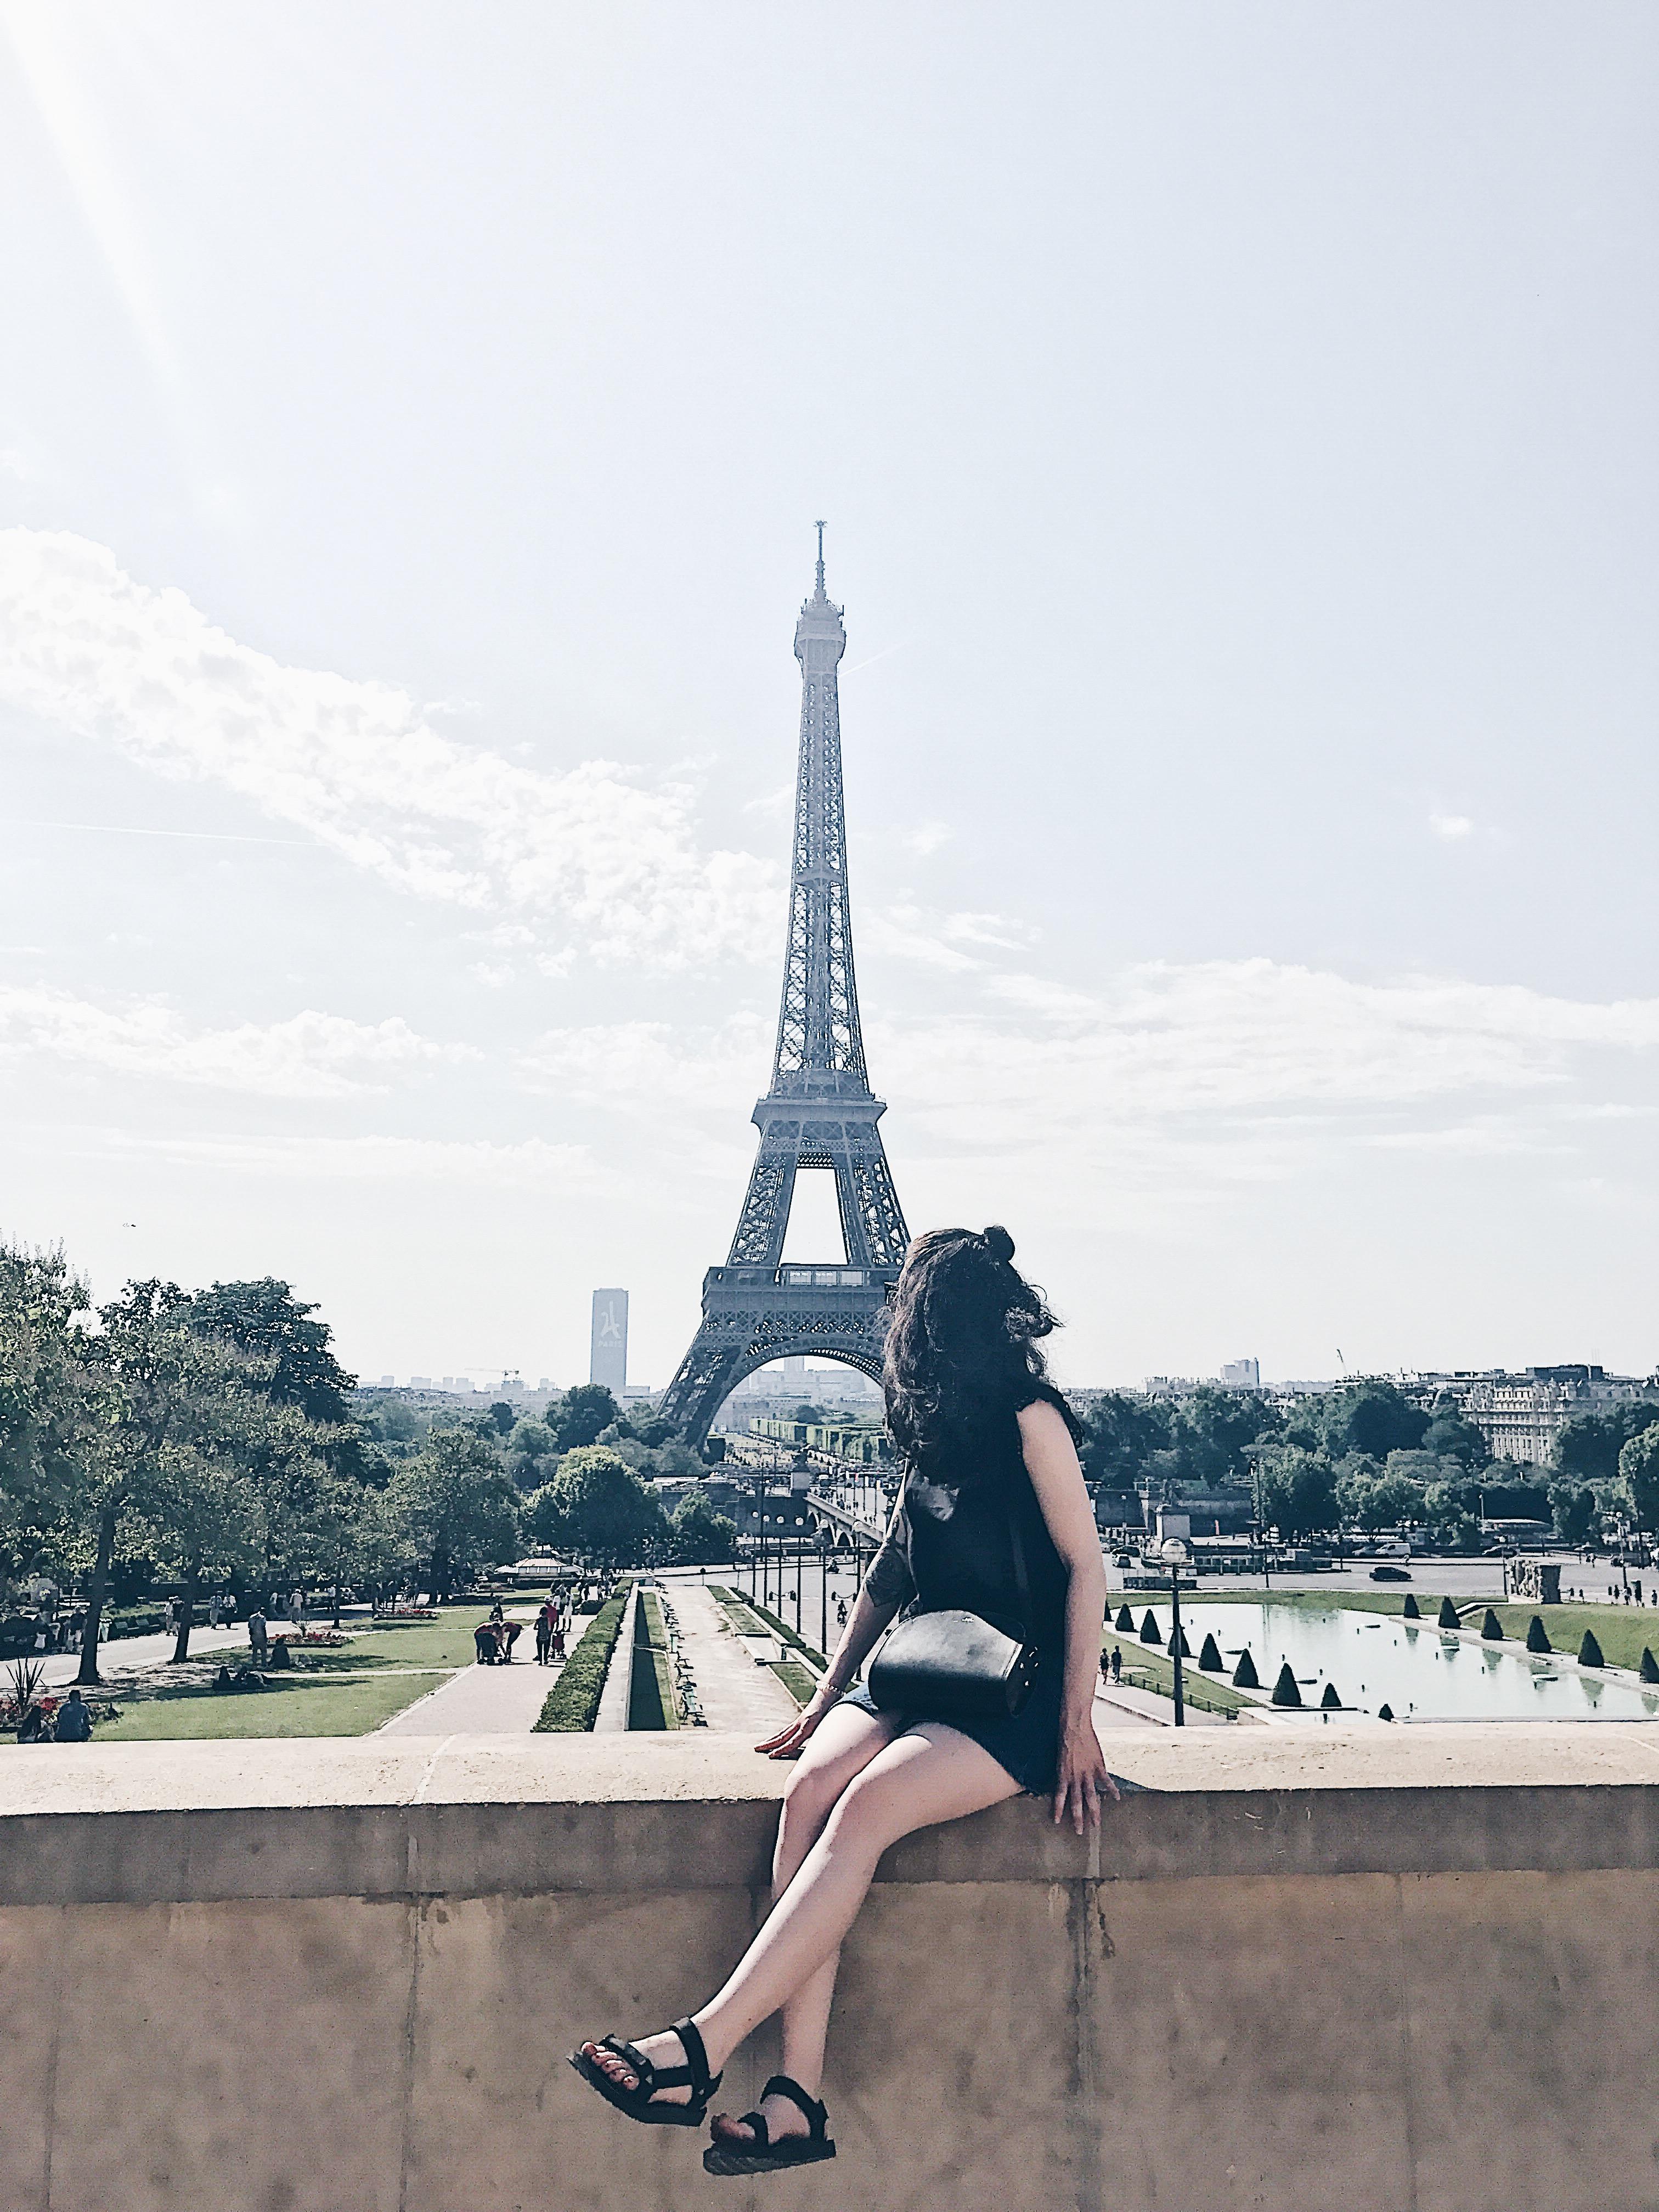 Paris, mon Amour ❤️
#paris #travel #eiffelturm #sightseeing #trocadero #apcparis 